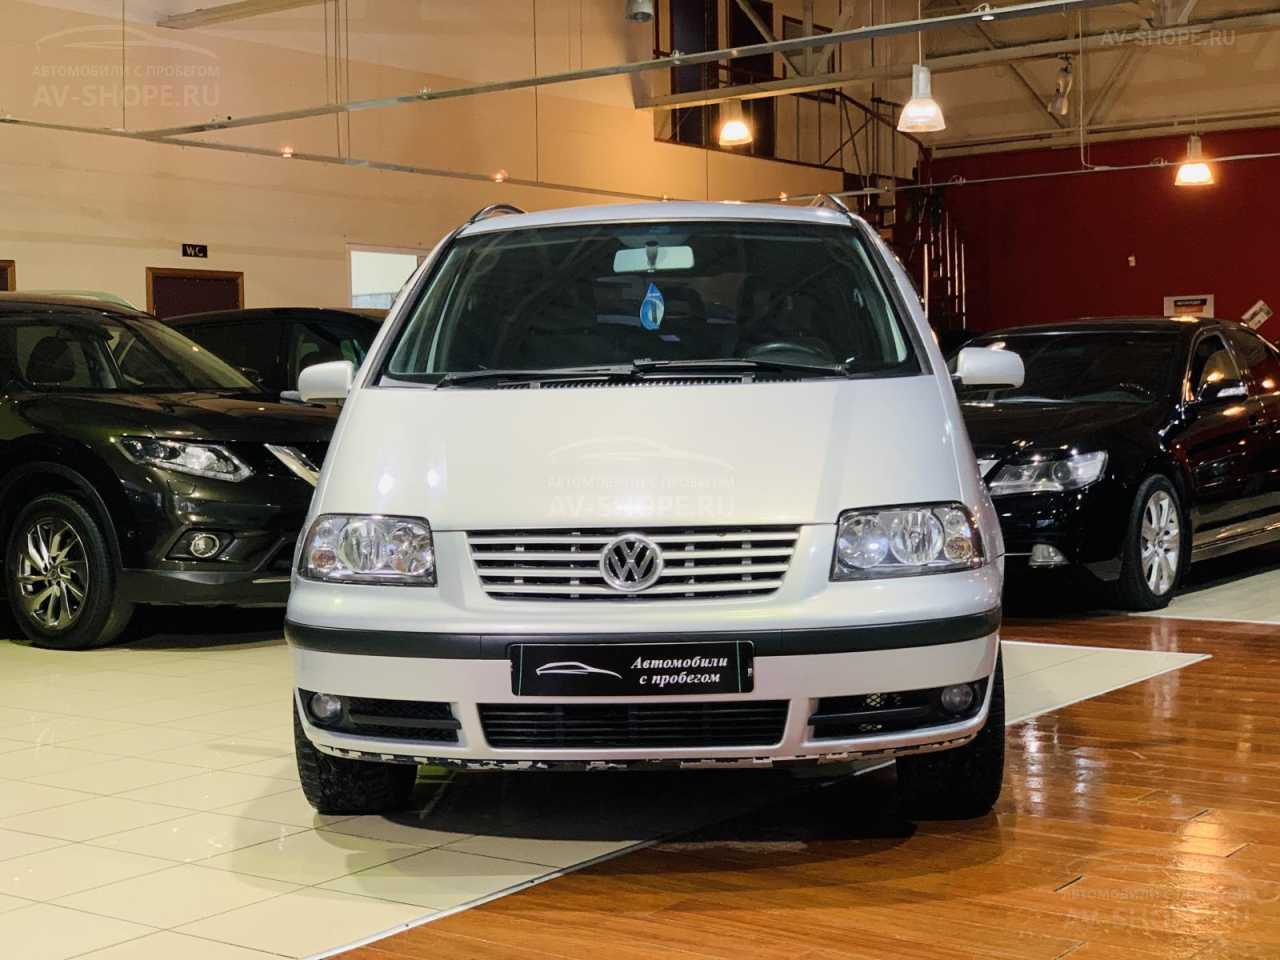 Volkswagen sharan 2003